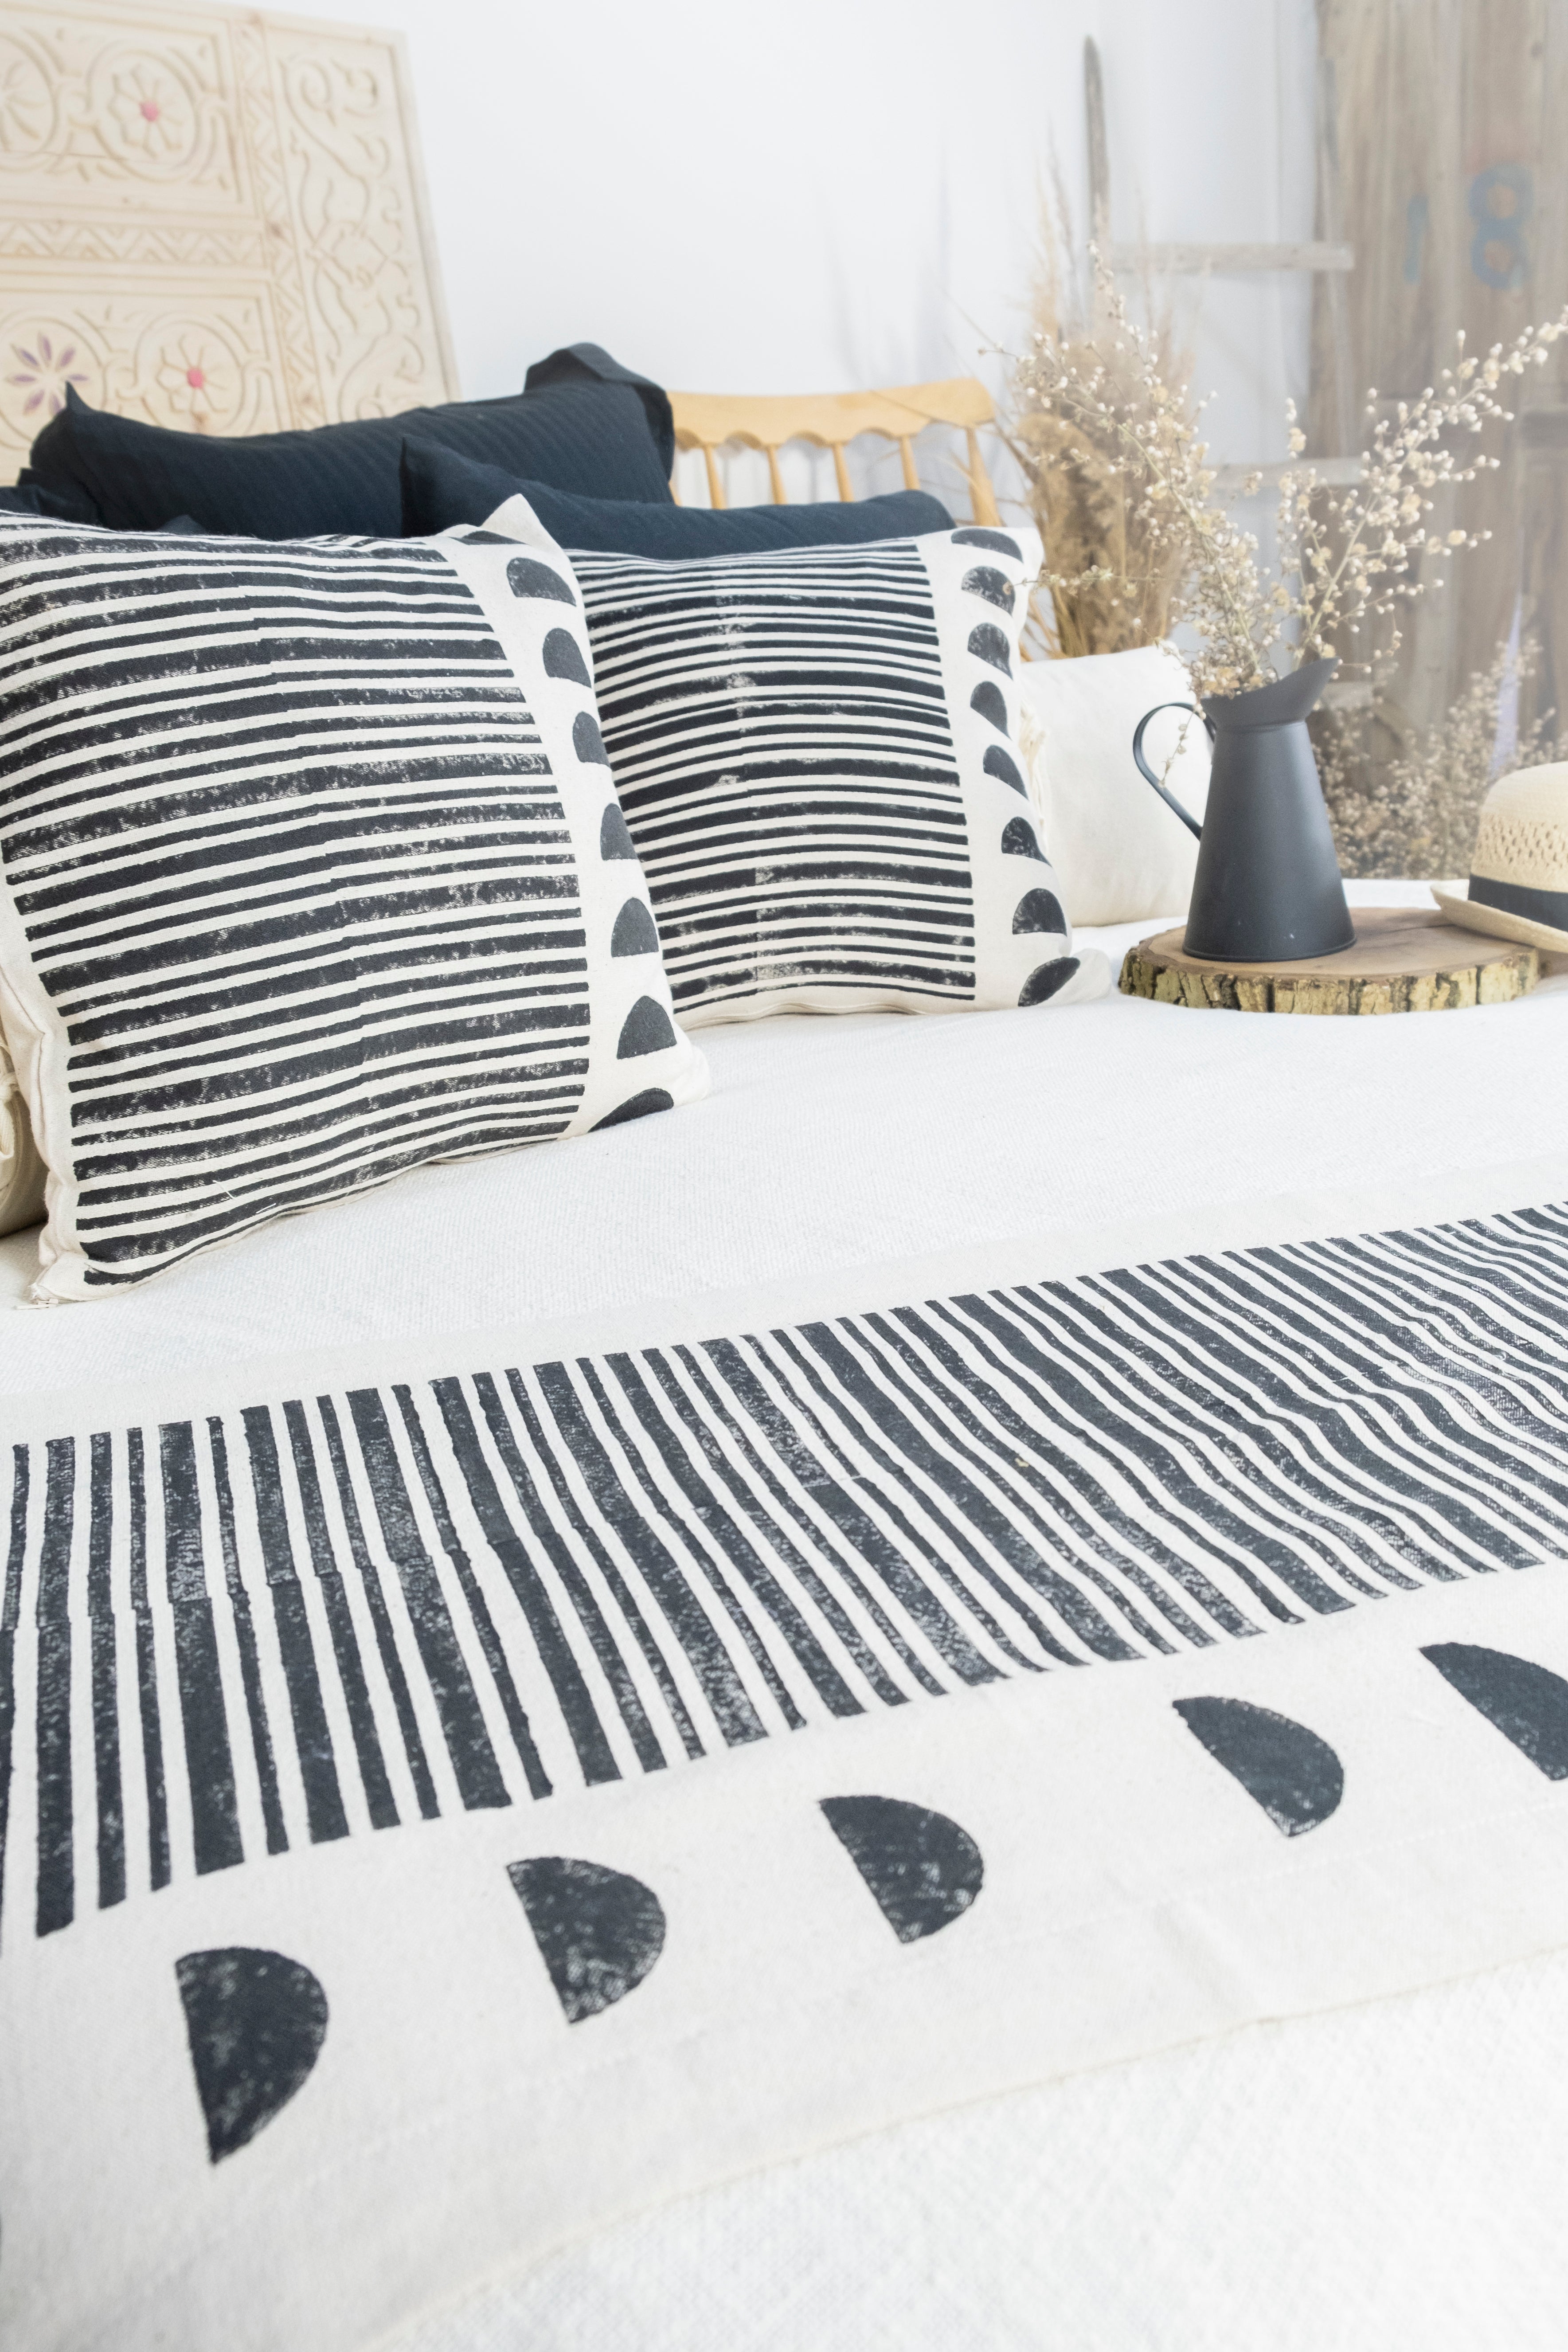 Black Block-Printed Cushion Covers & Table Runner Set